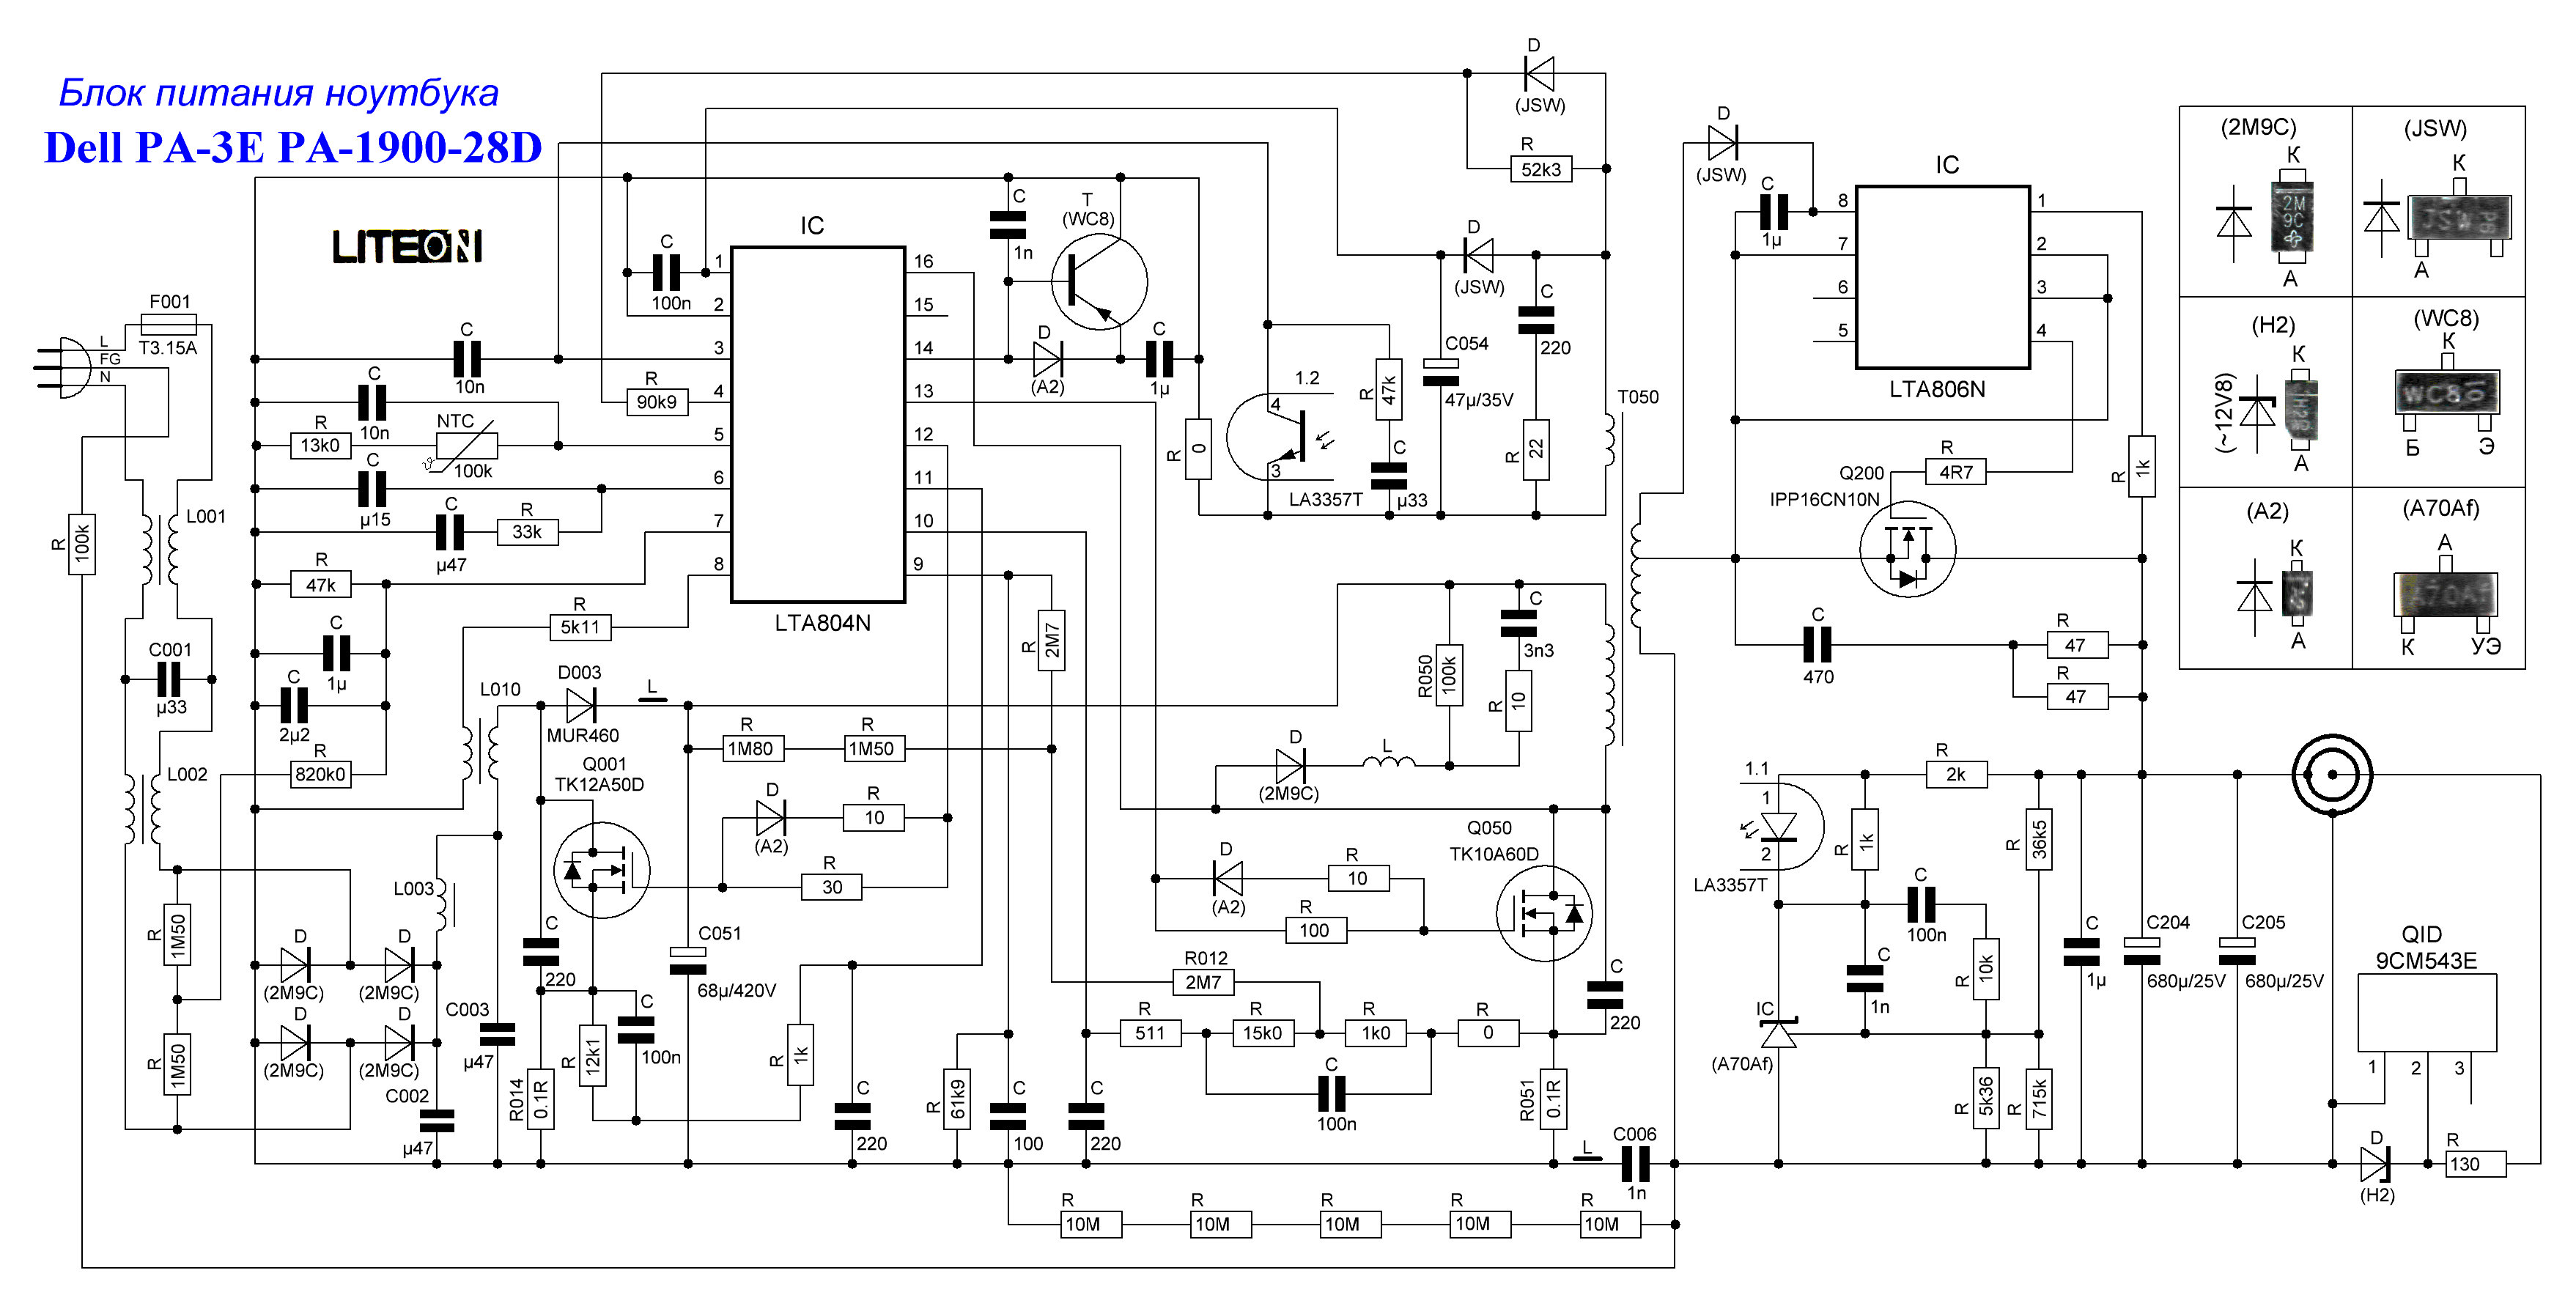 Dell Laptop Power Supply Wiring Diagram - Wiring Diagram